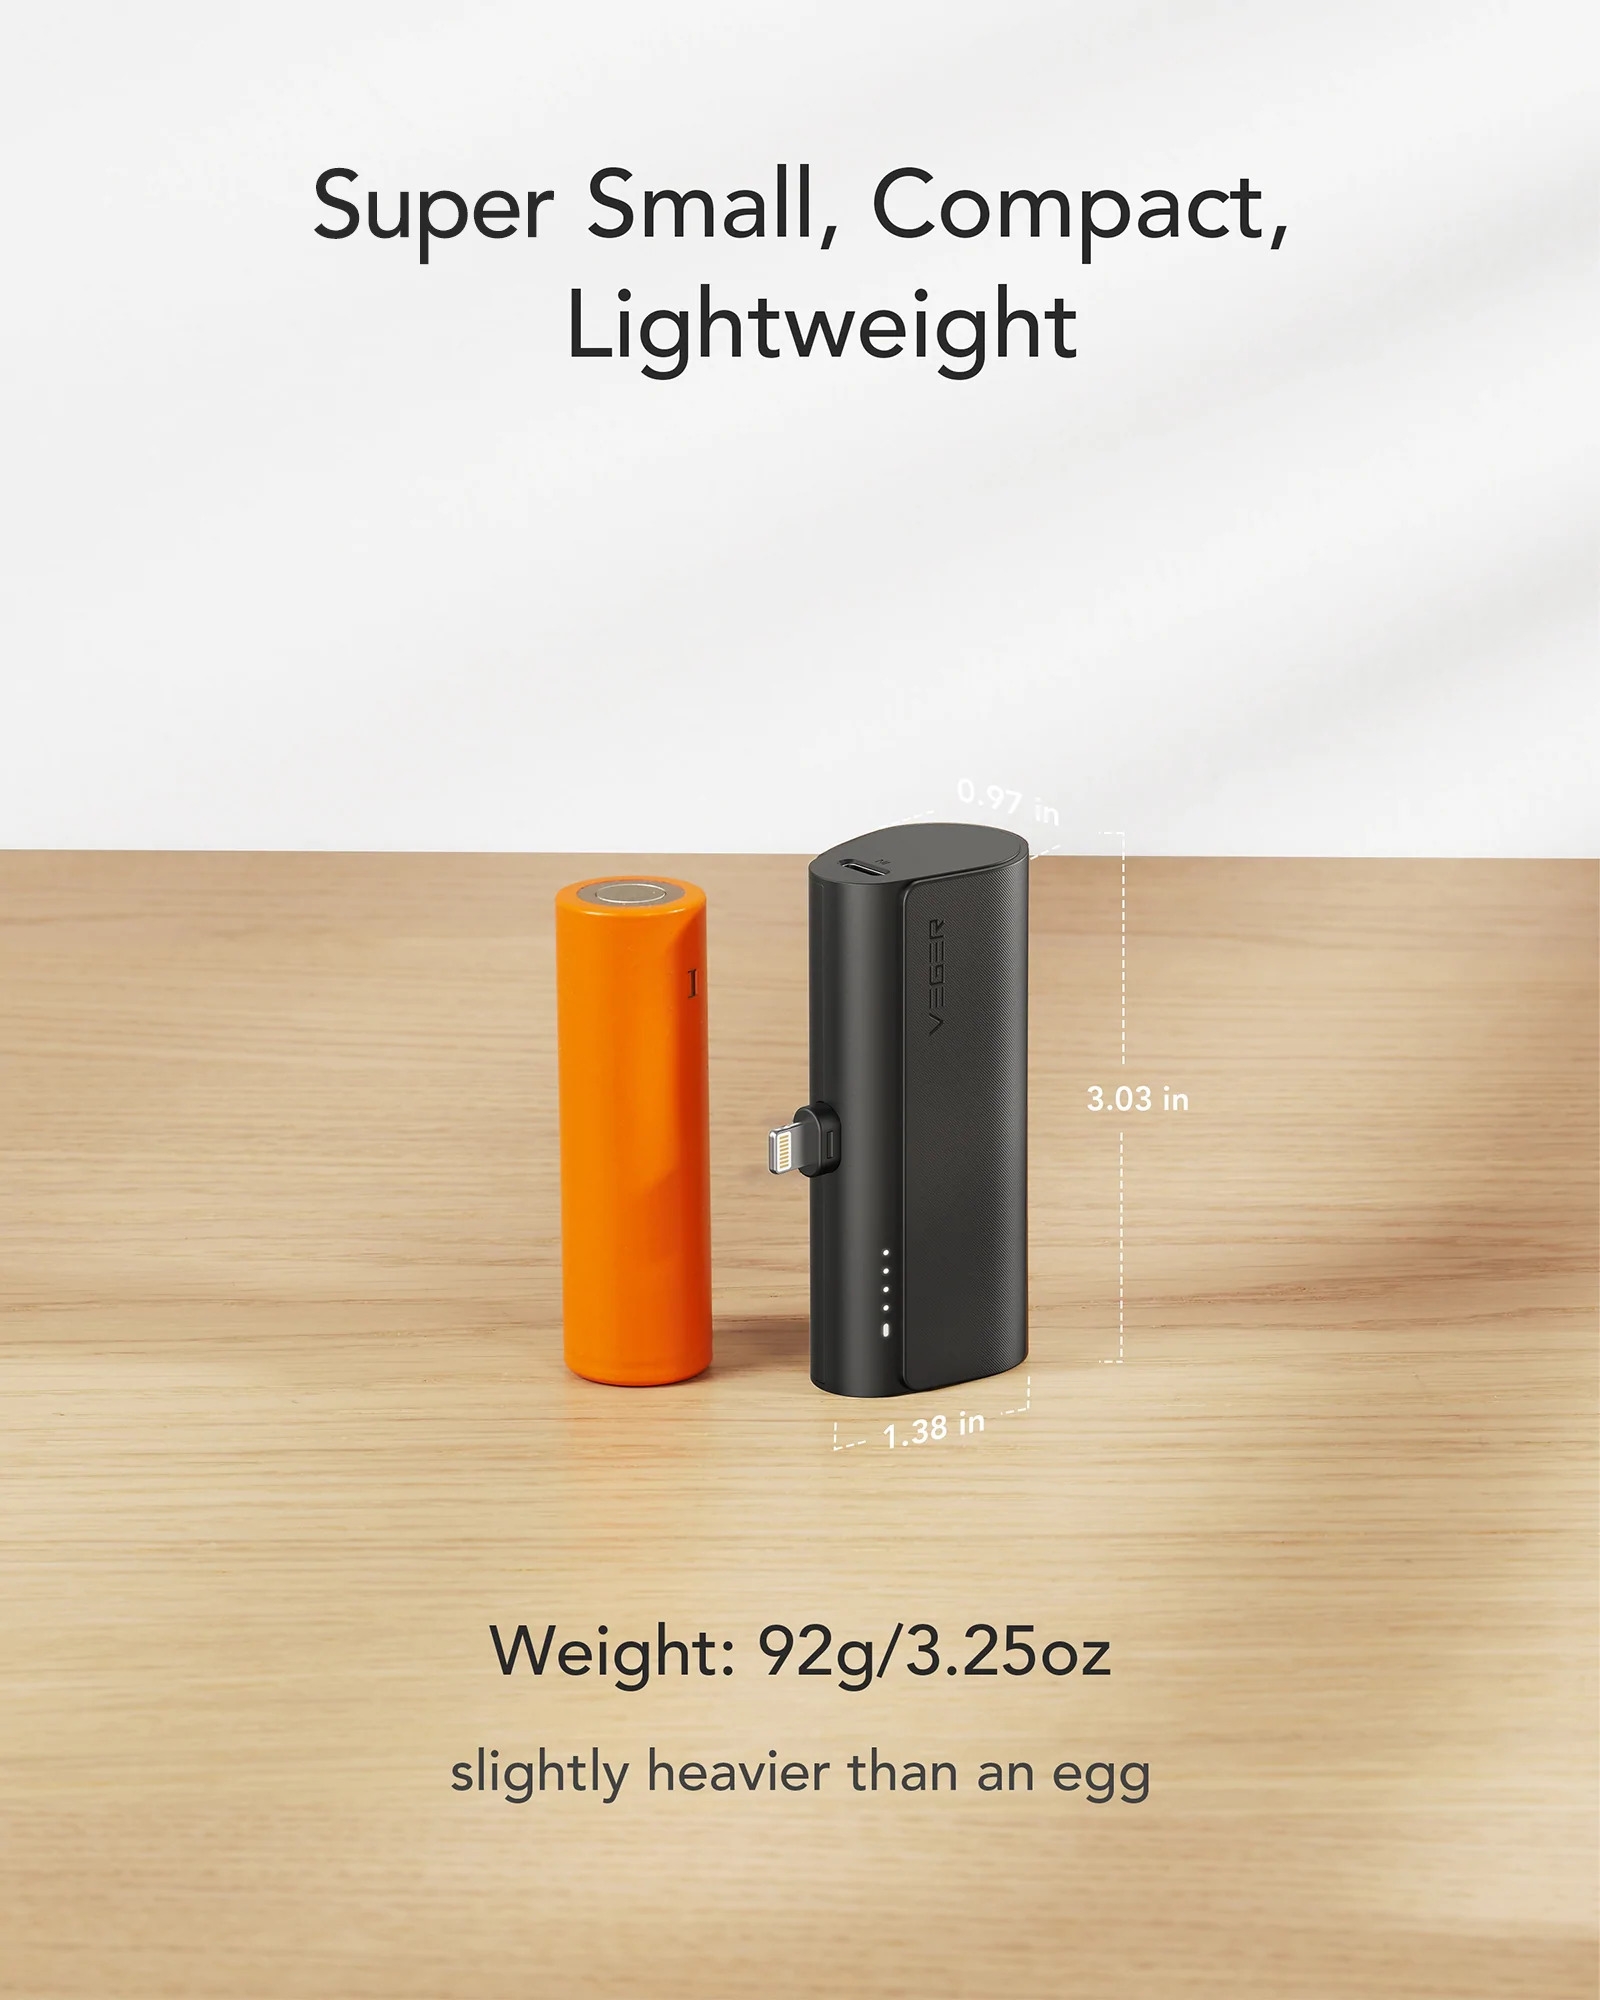 باور بانك محمول للآيفون VEGER Mini Portable Charger for iPhone سعة 5000 مللي أمبير - 4}